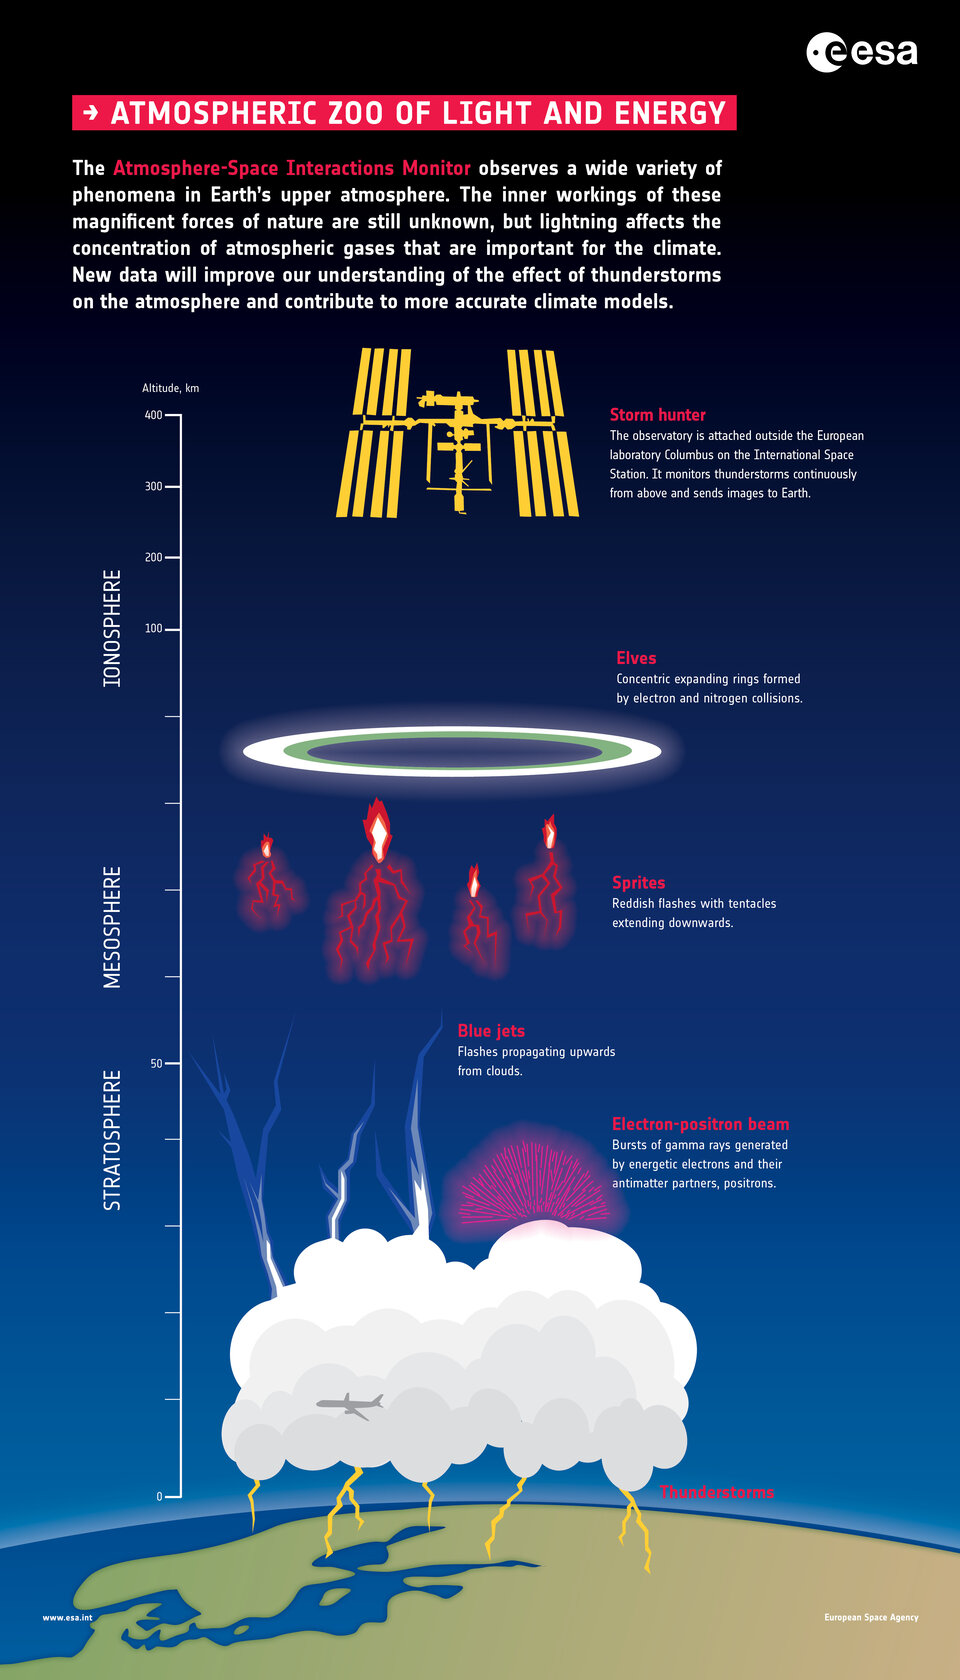 Different lightning phenomena in the upper atmosphere